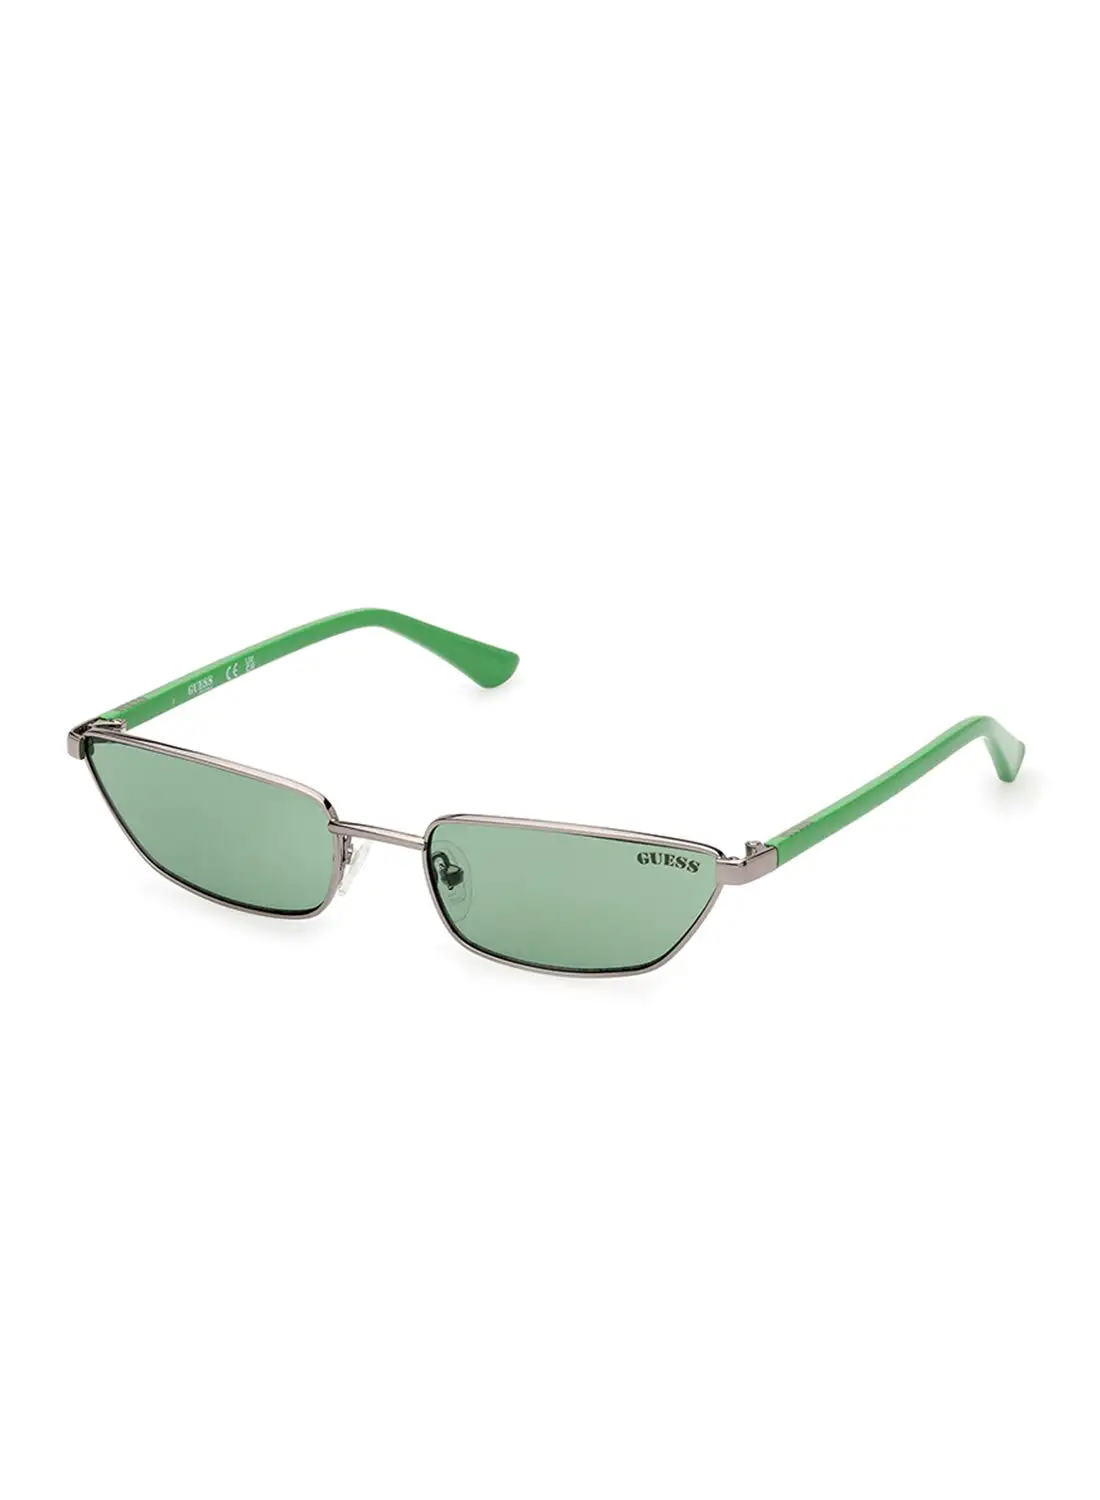 GUESS Women's UV Protection Cat Eye Shape Sunglasses - GU828508N57 - Lens Size: 57 Mm